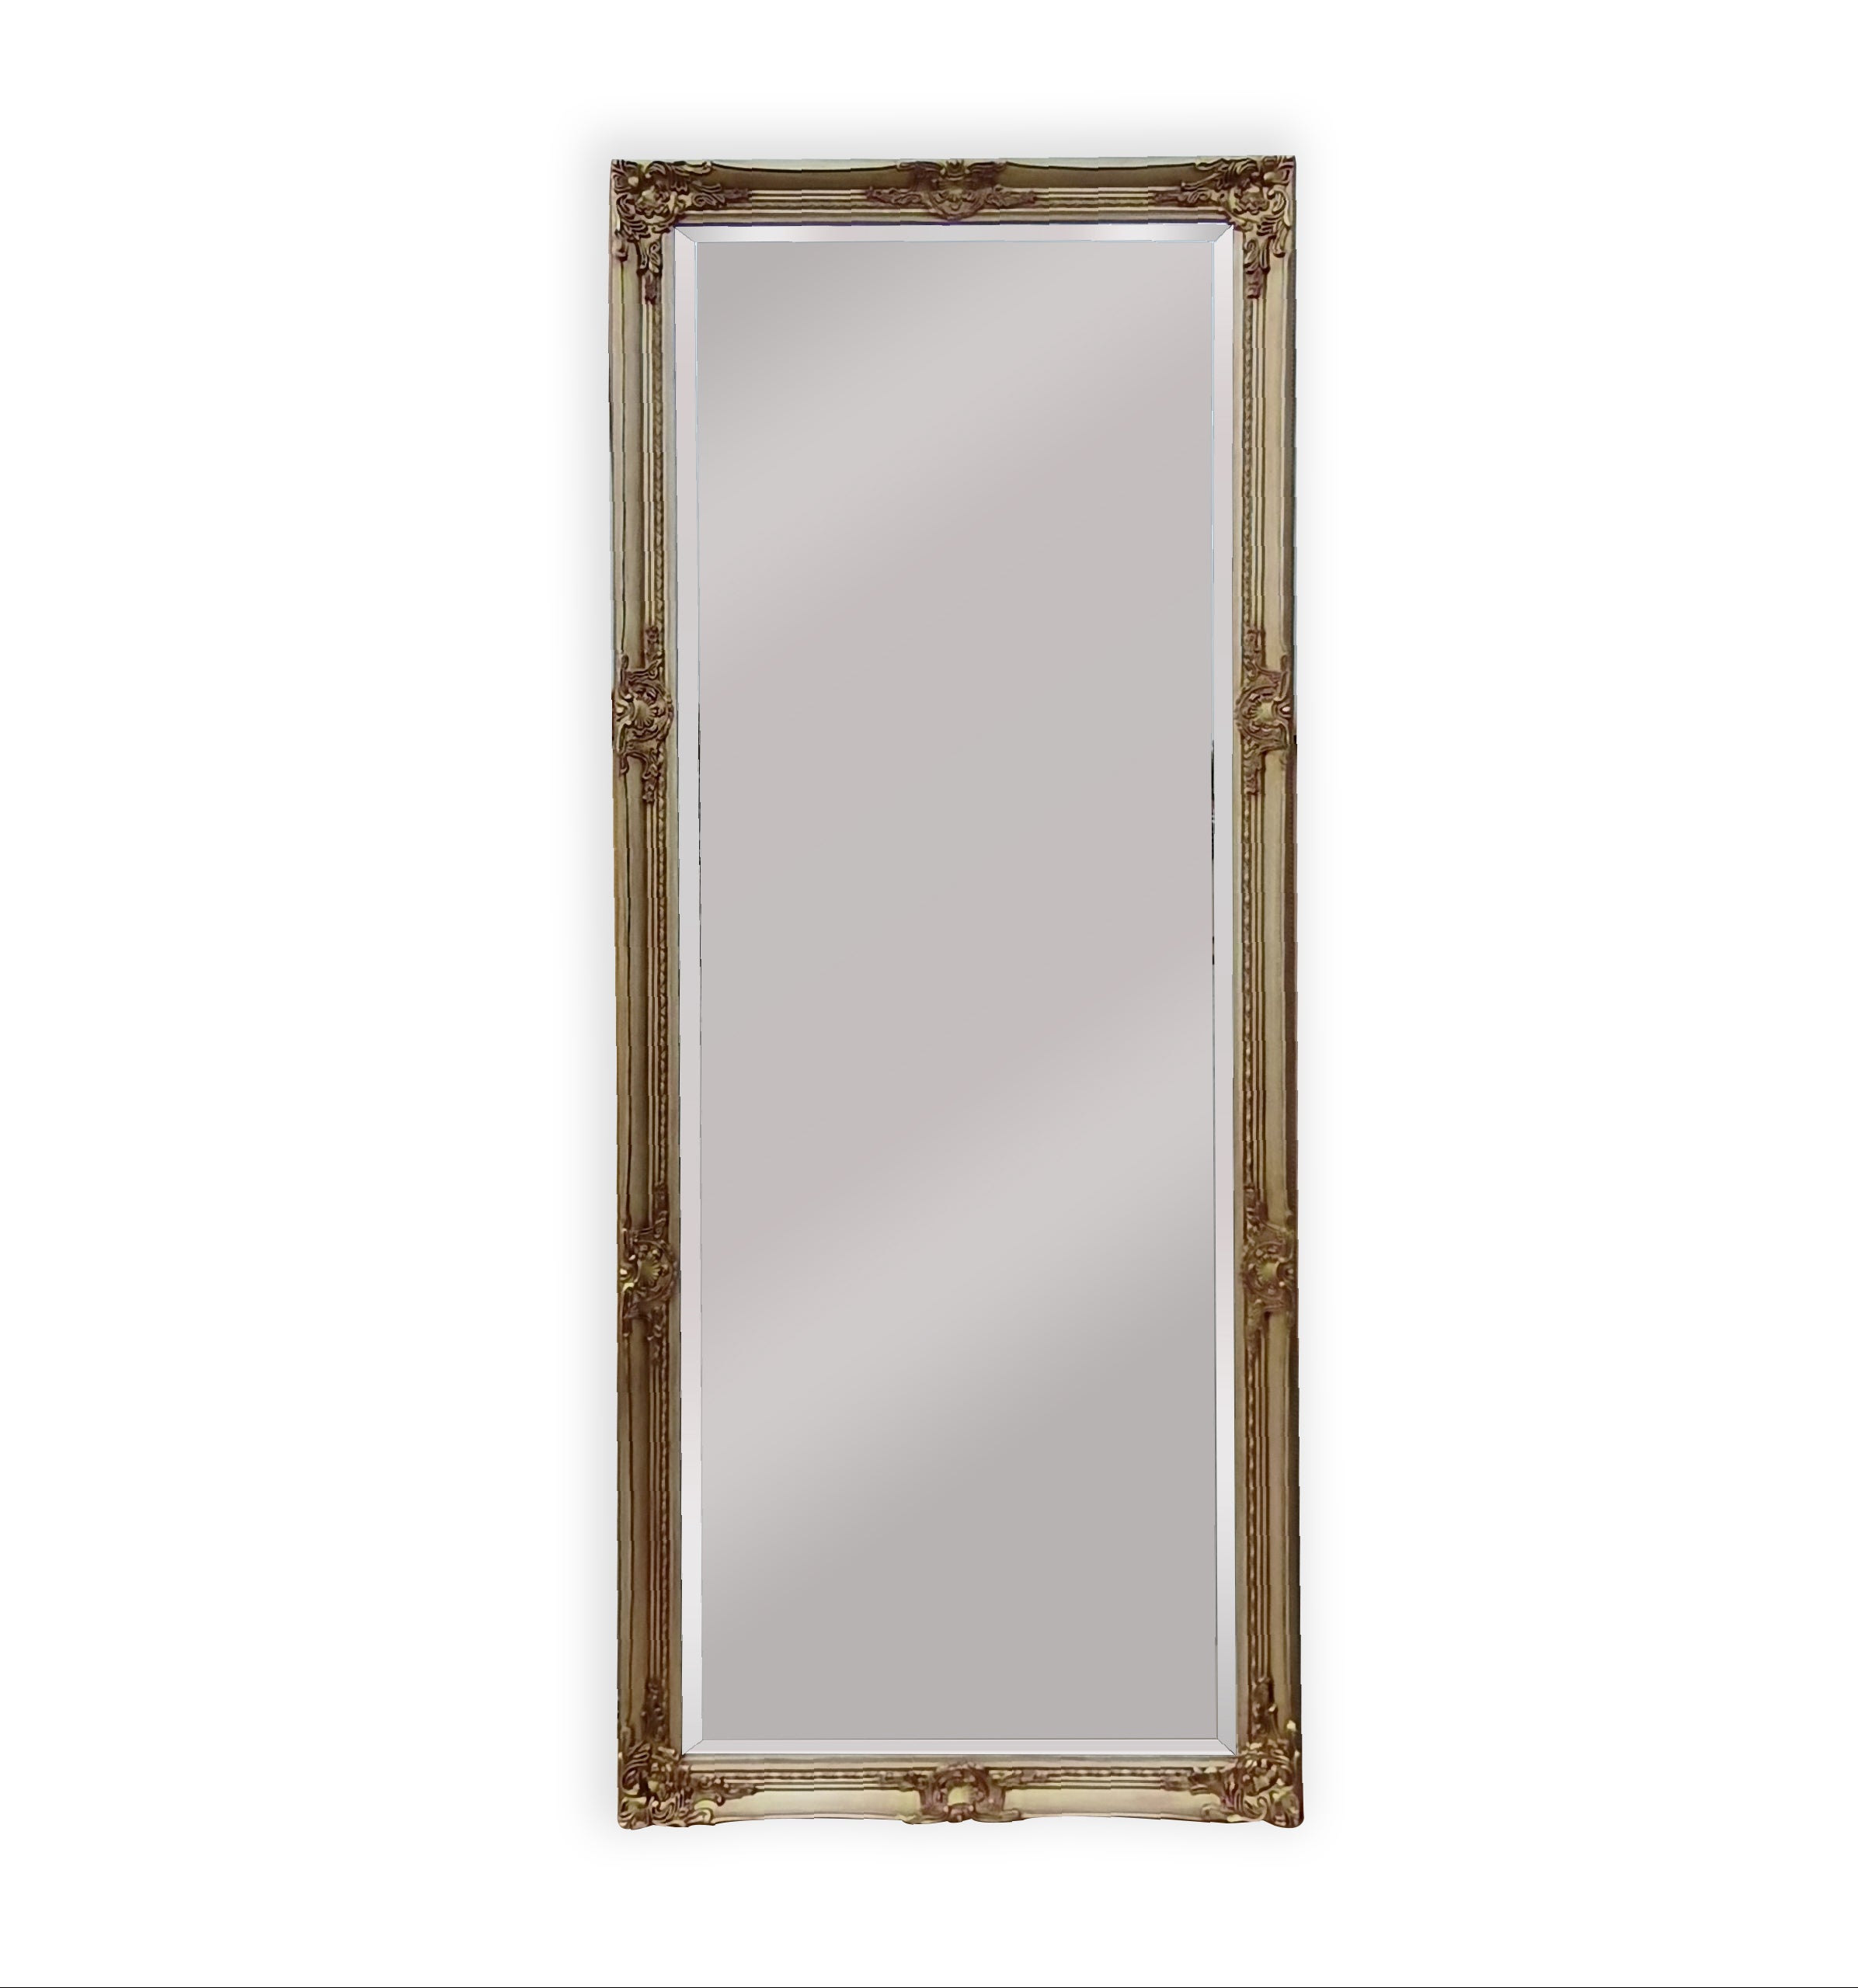 Champagne French Provincial Ornate Mirror - Medium 70cm x 170cm